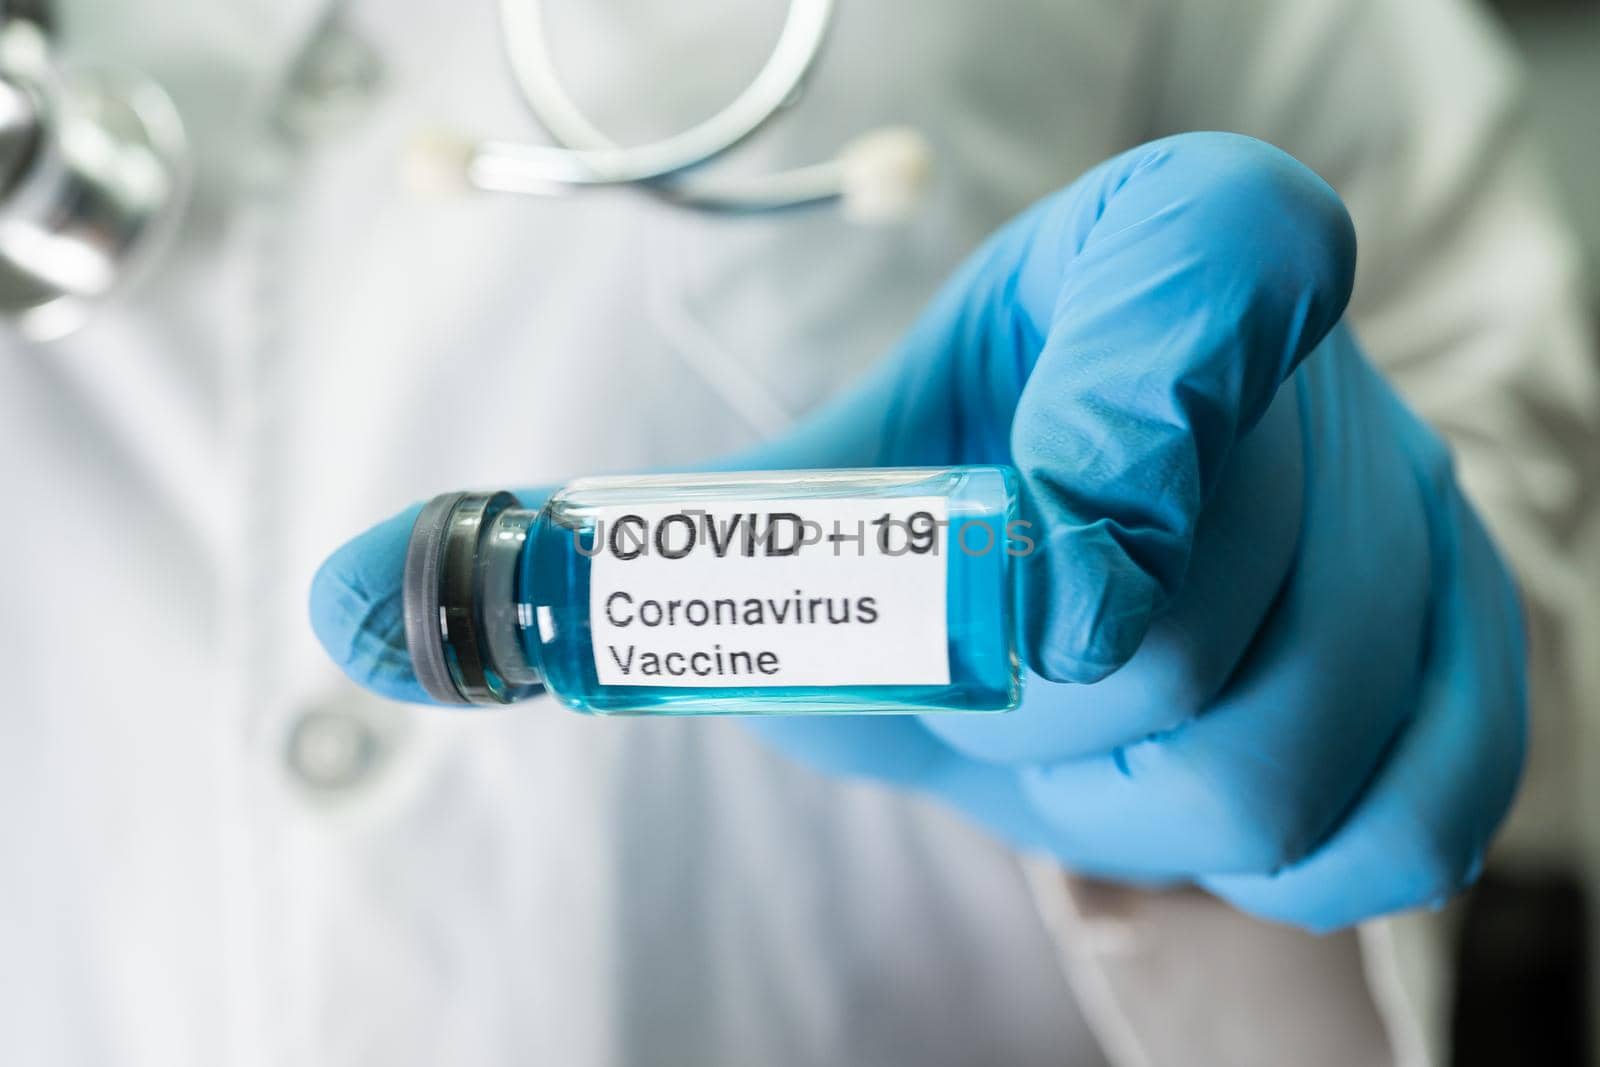 Coronavirus Covid-19 vaccine development medical with syringe for doctor use to treat pneumonia illness patients. by pamai